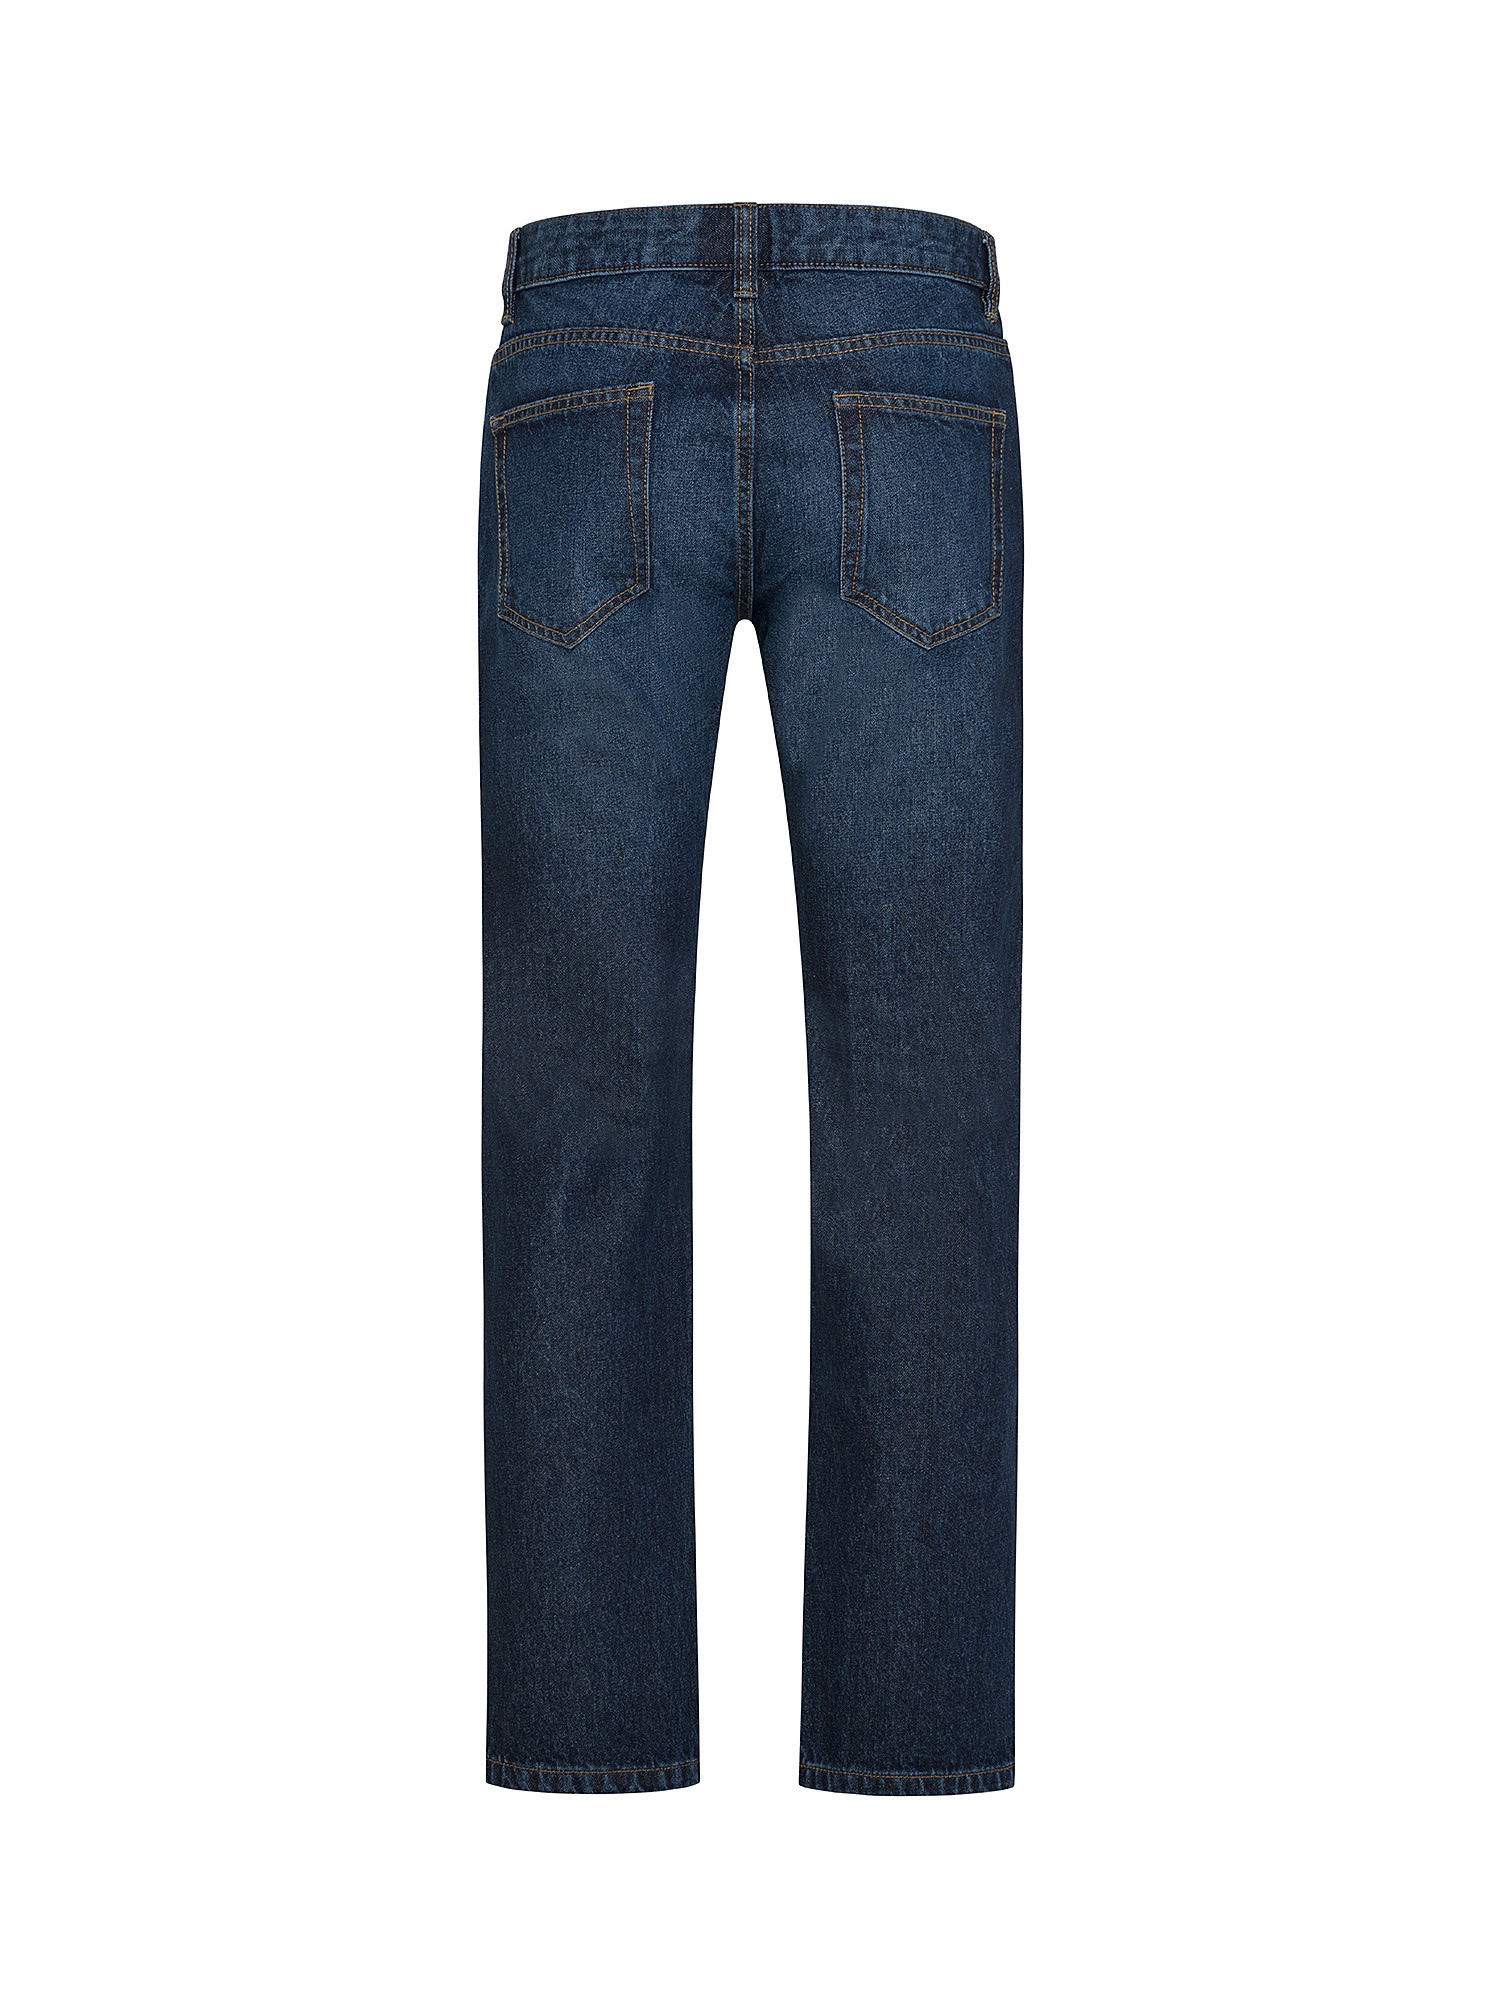 JCT - Jeans cinque tasche in puro cotone, Blu scuro, large